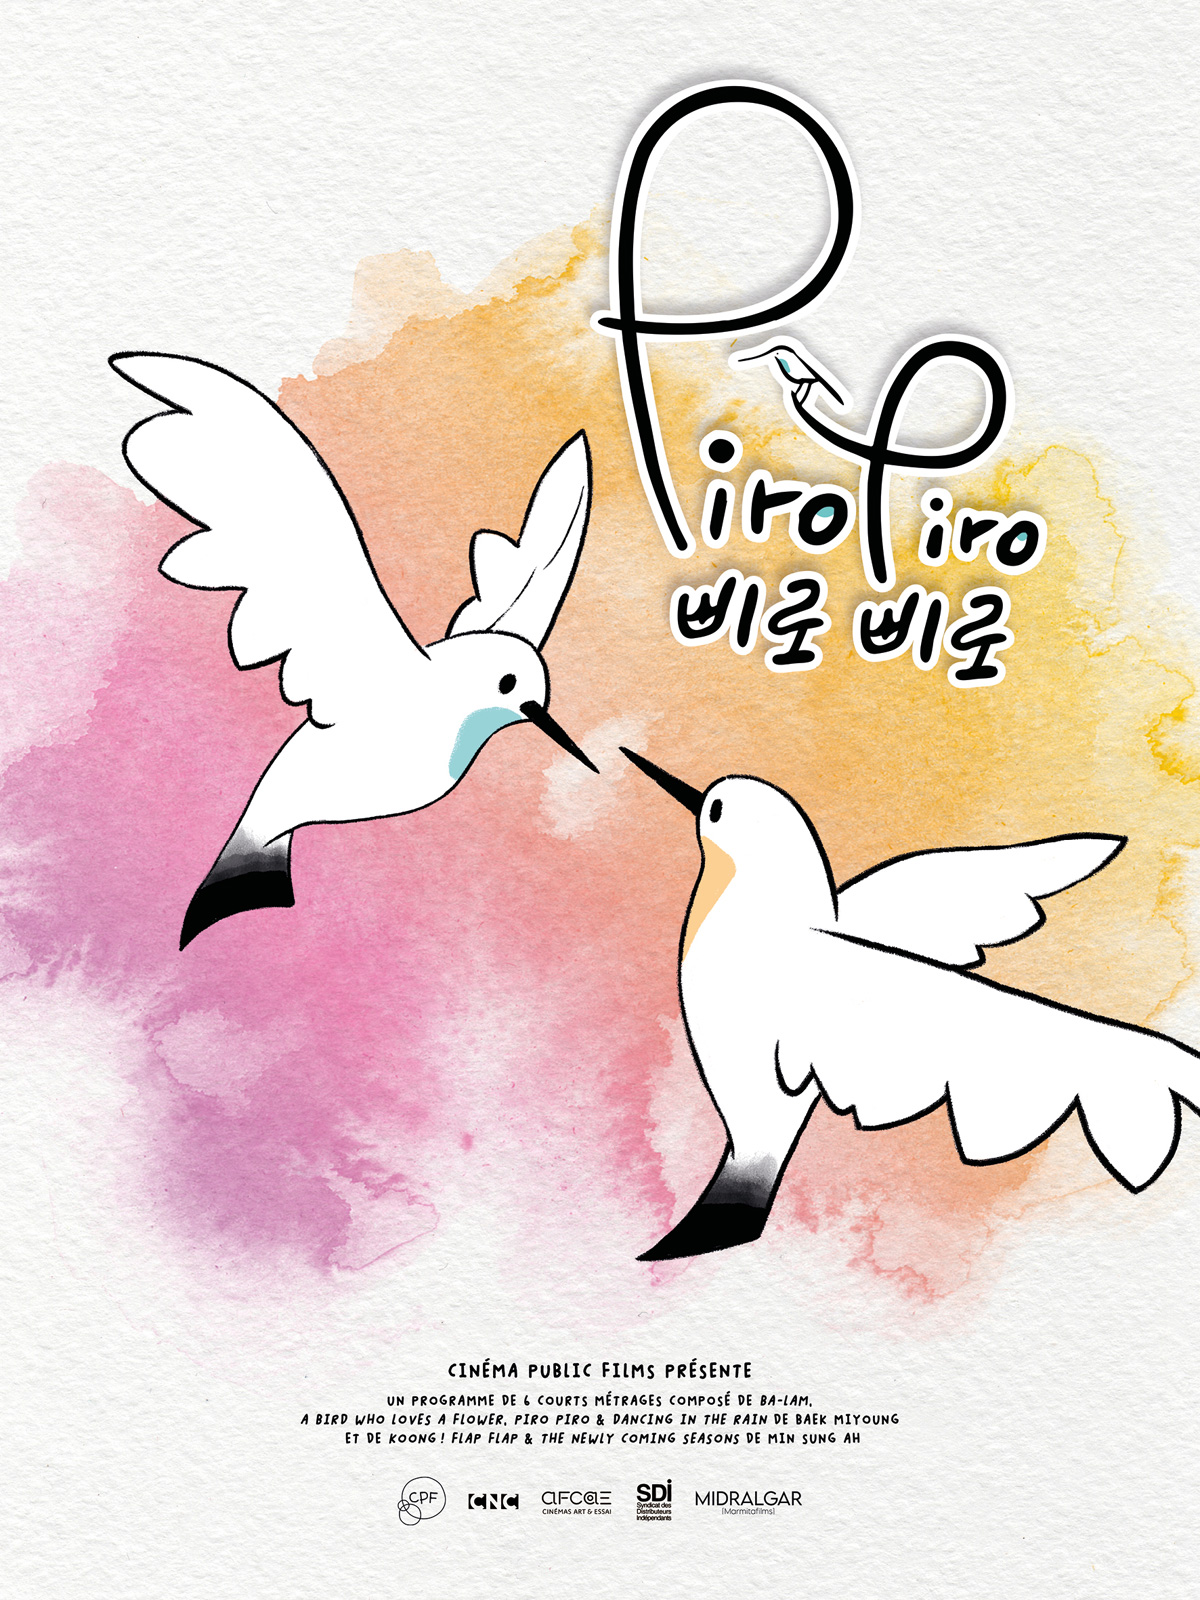  Piro Piro - Sung-ah MIN, Miyoung Baek